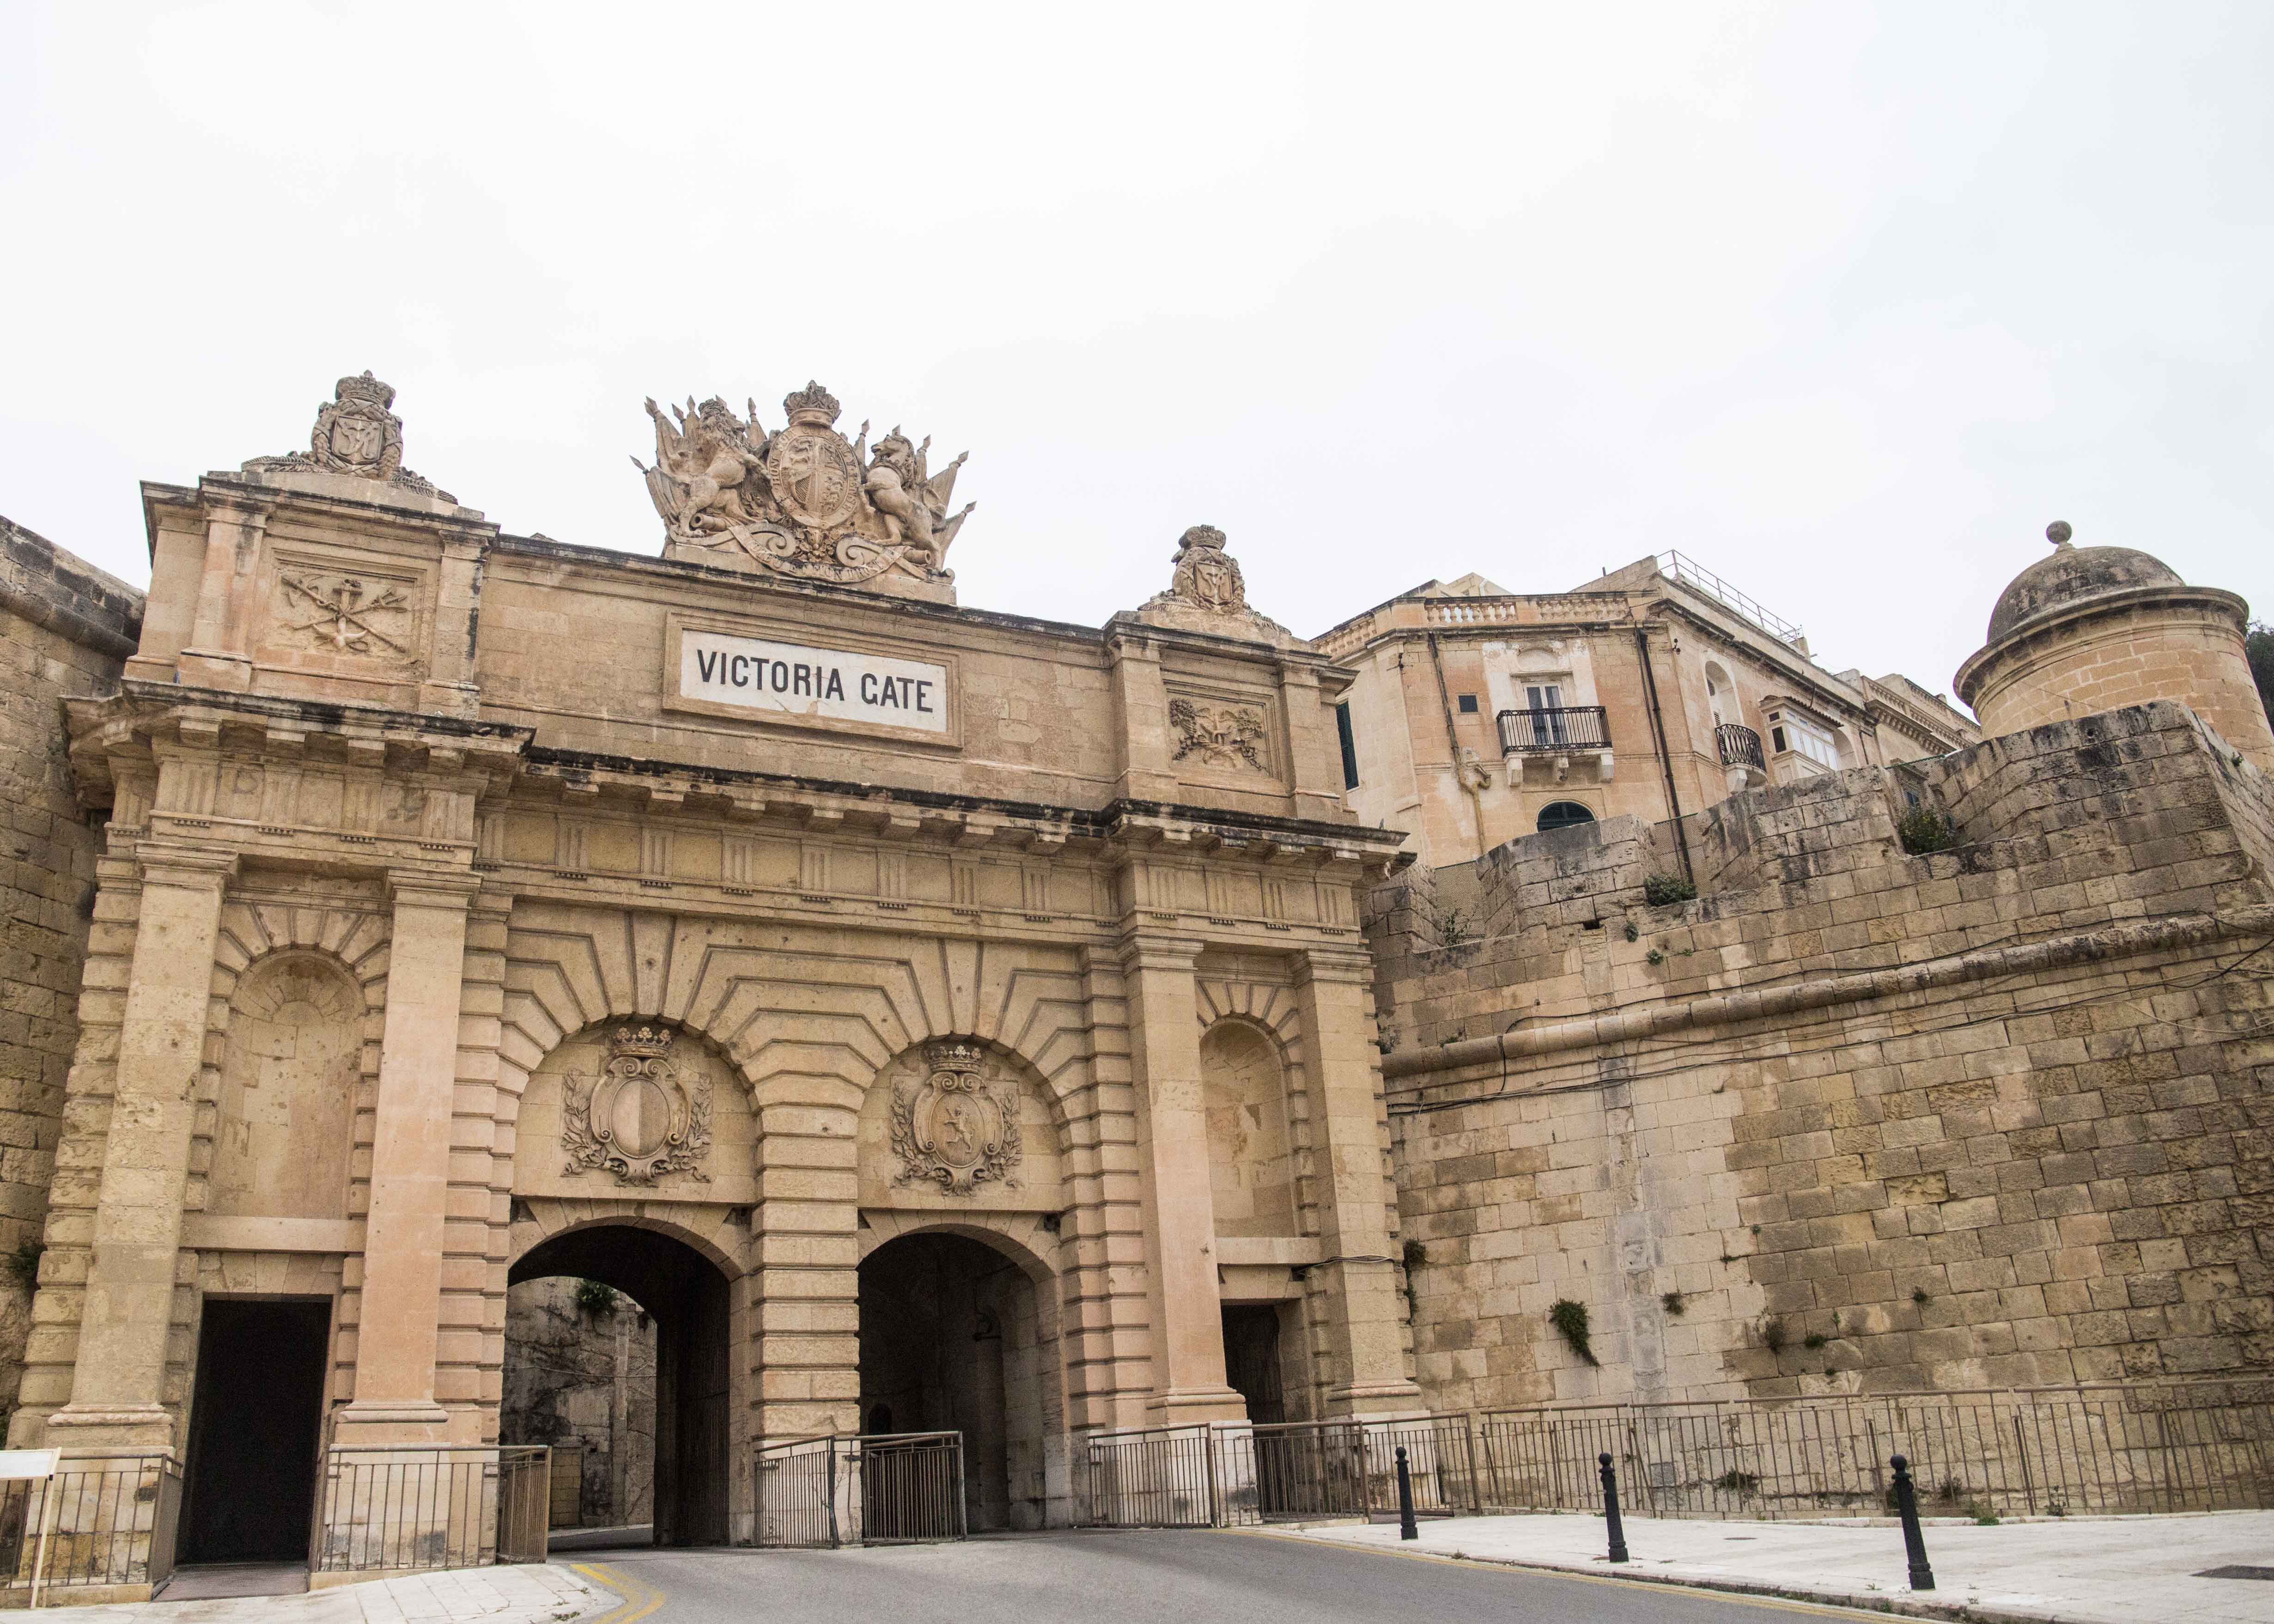 Where to visit in Valletta? Victoria Gate